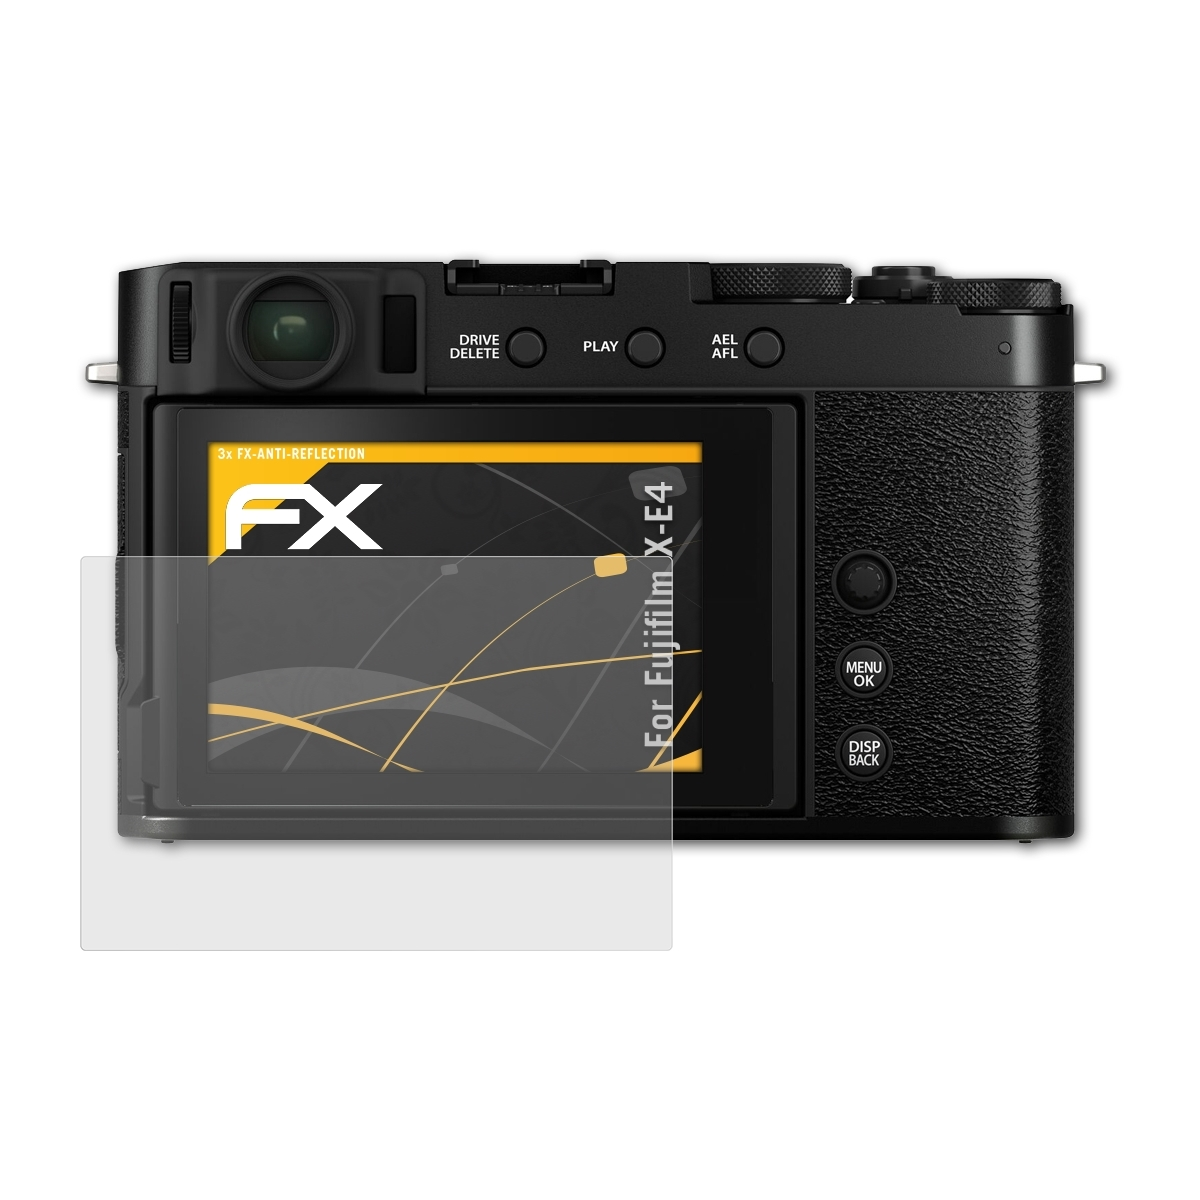 X-E4) Fujifilm Displayschutz(für 3x ATFOLIX FX-Antireflex